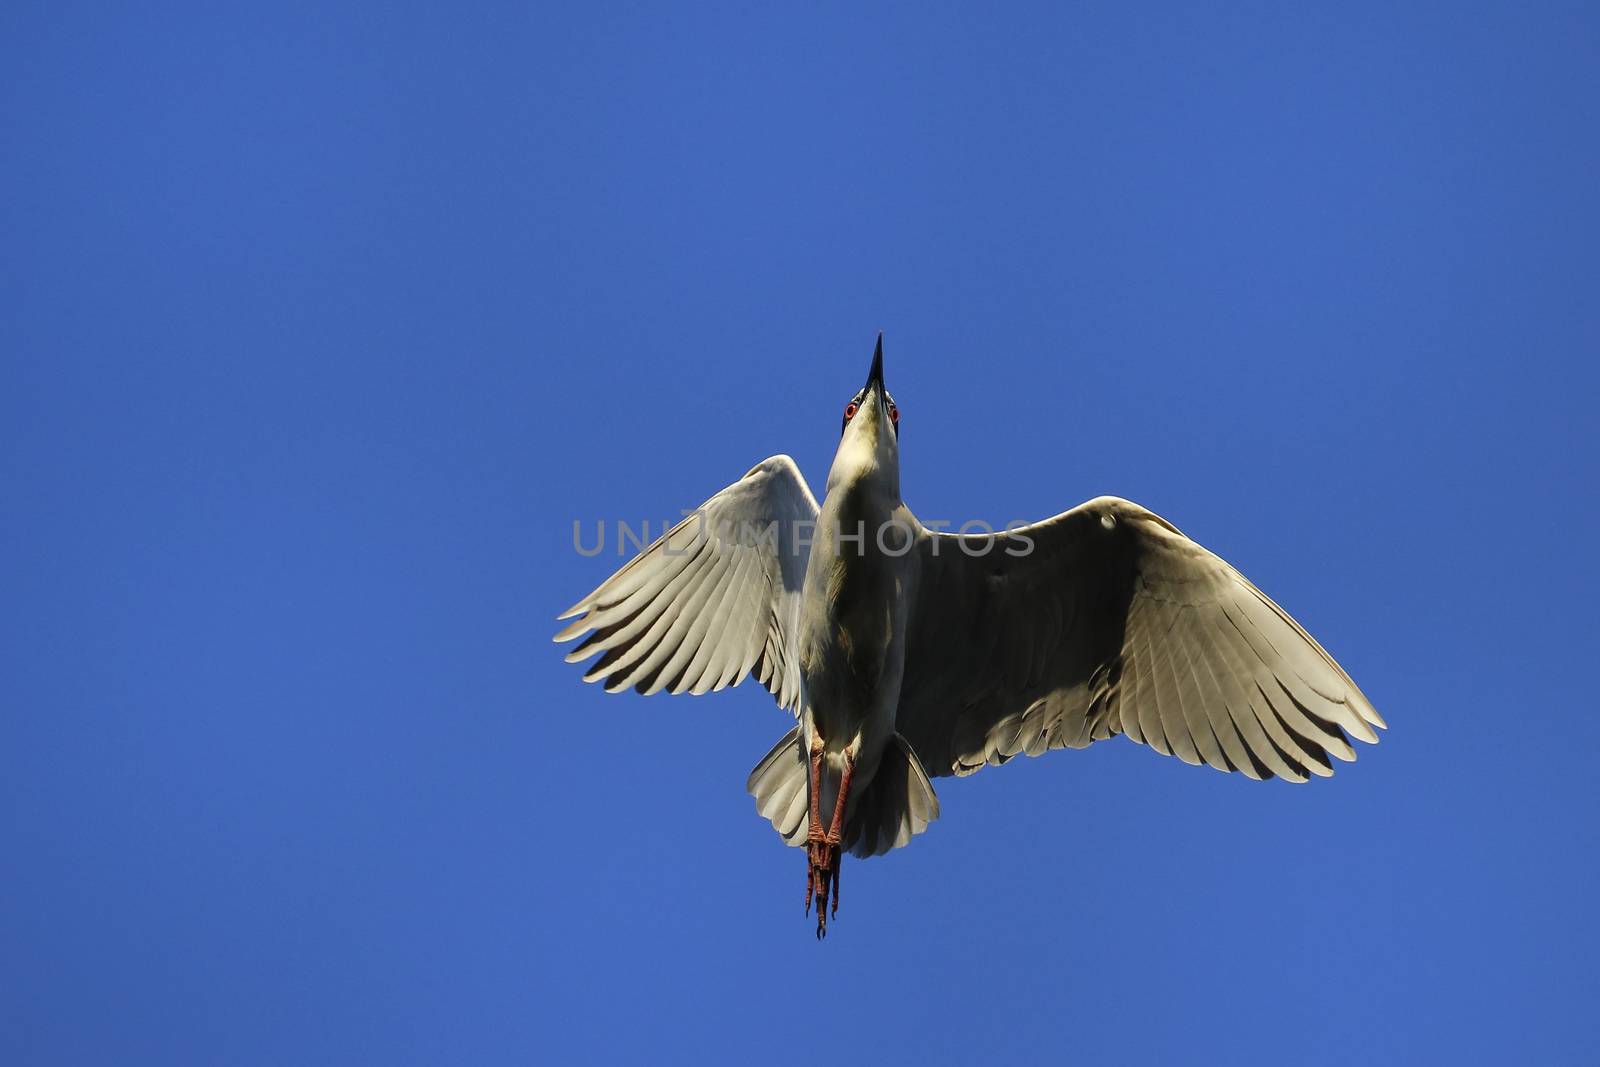 Black-crowned night heron flying in blue sky by donya_nedomam